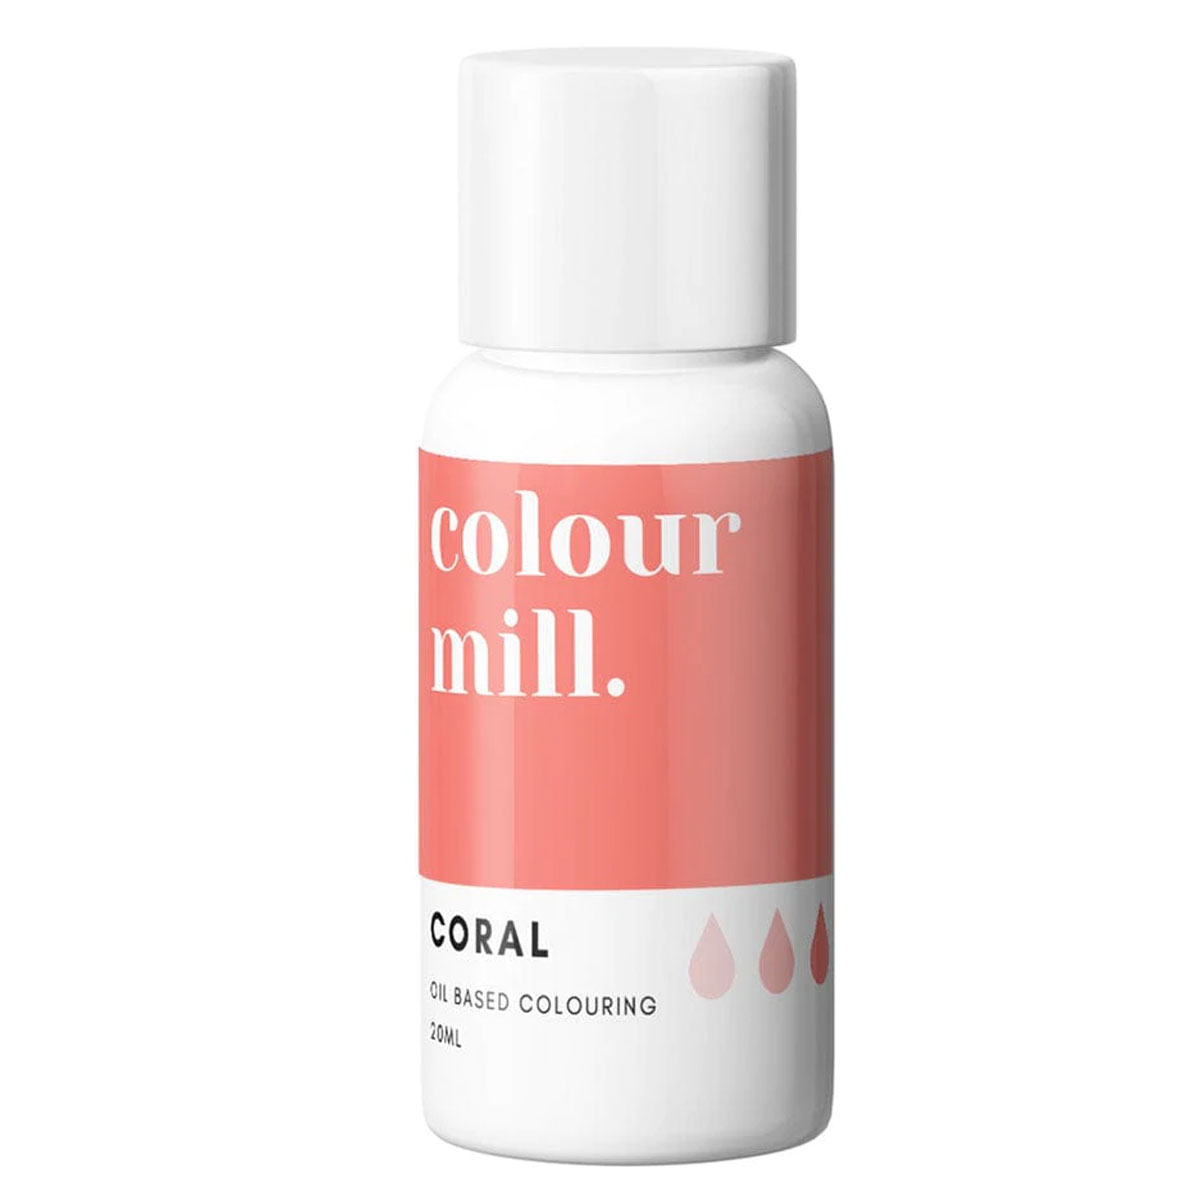 Colour Mill fettlösliche Lebensmittelfarbe Coral Rot